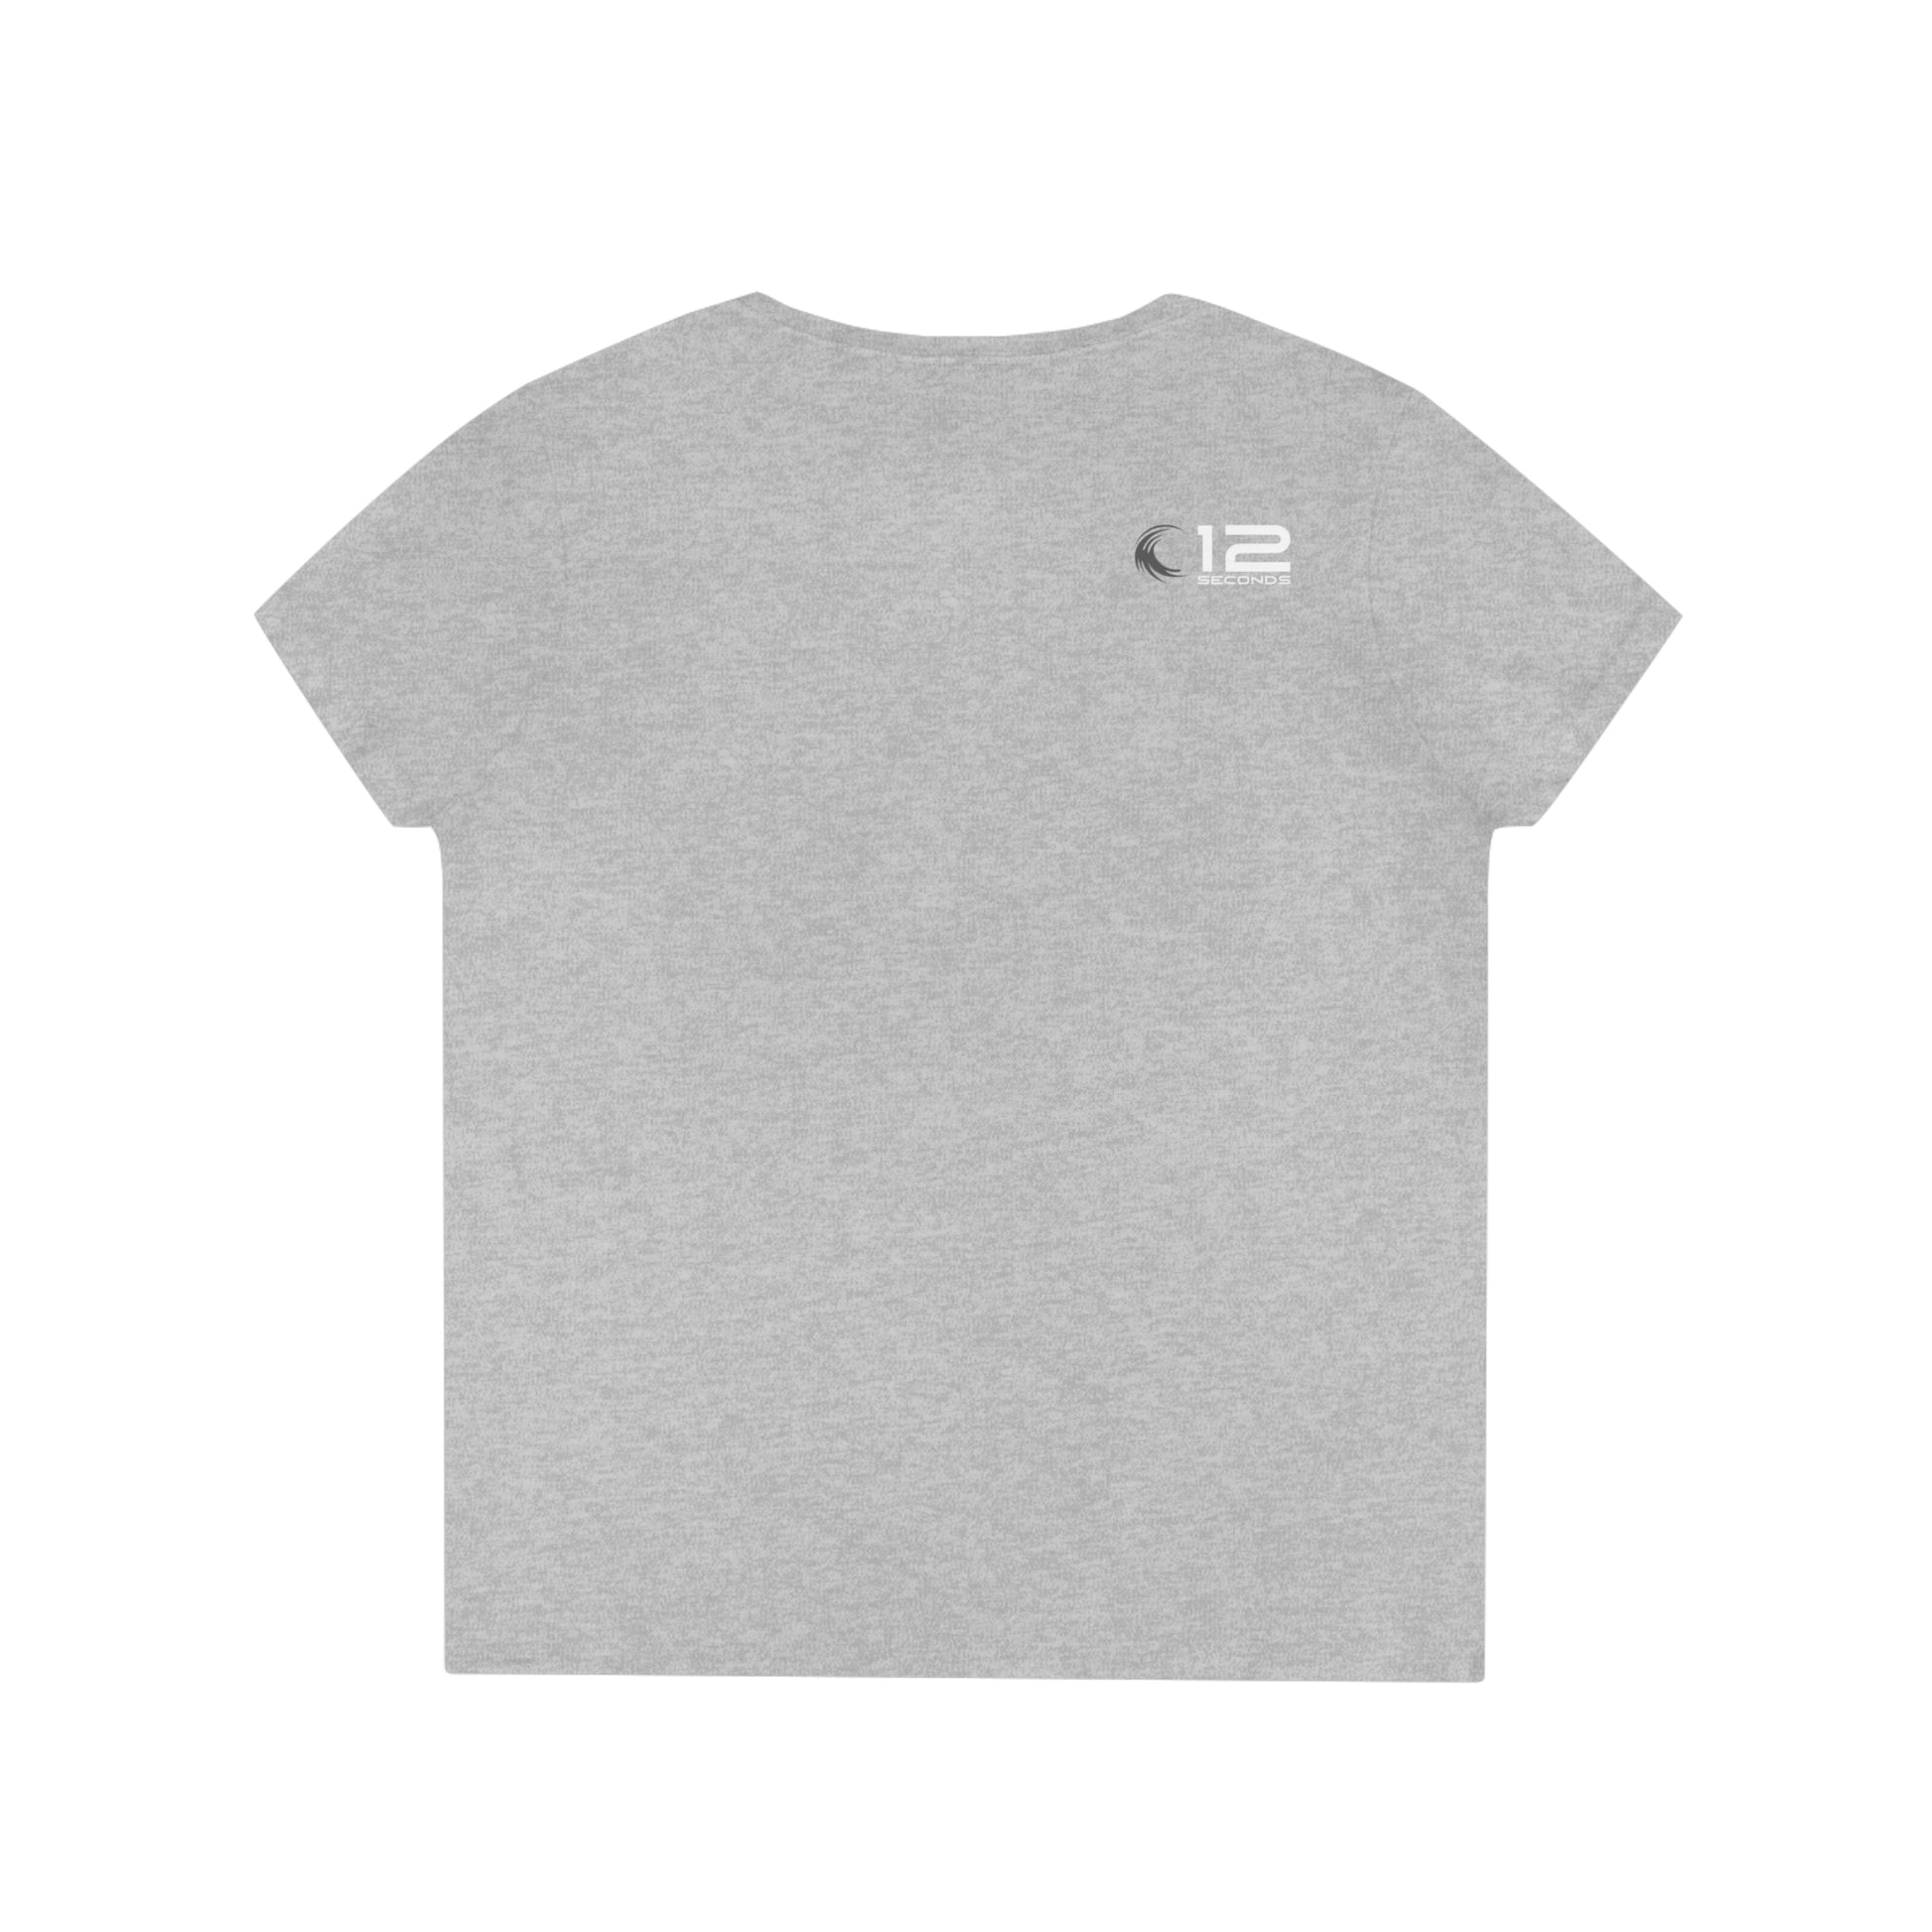 Ladies' V-Neck T-Shirt - SUNBIRDS - 12 SECONDS APPAREL